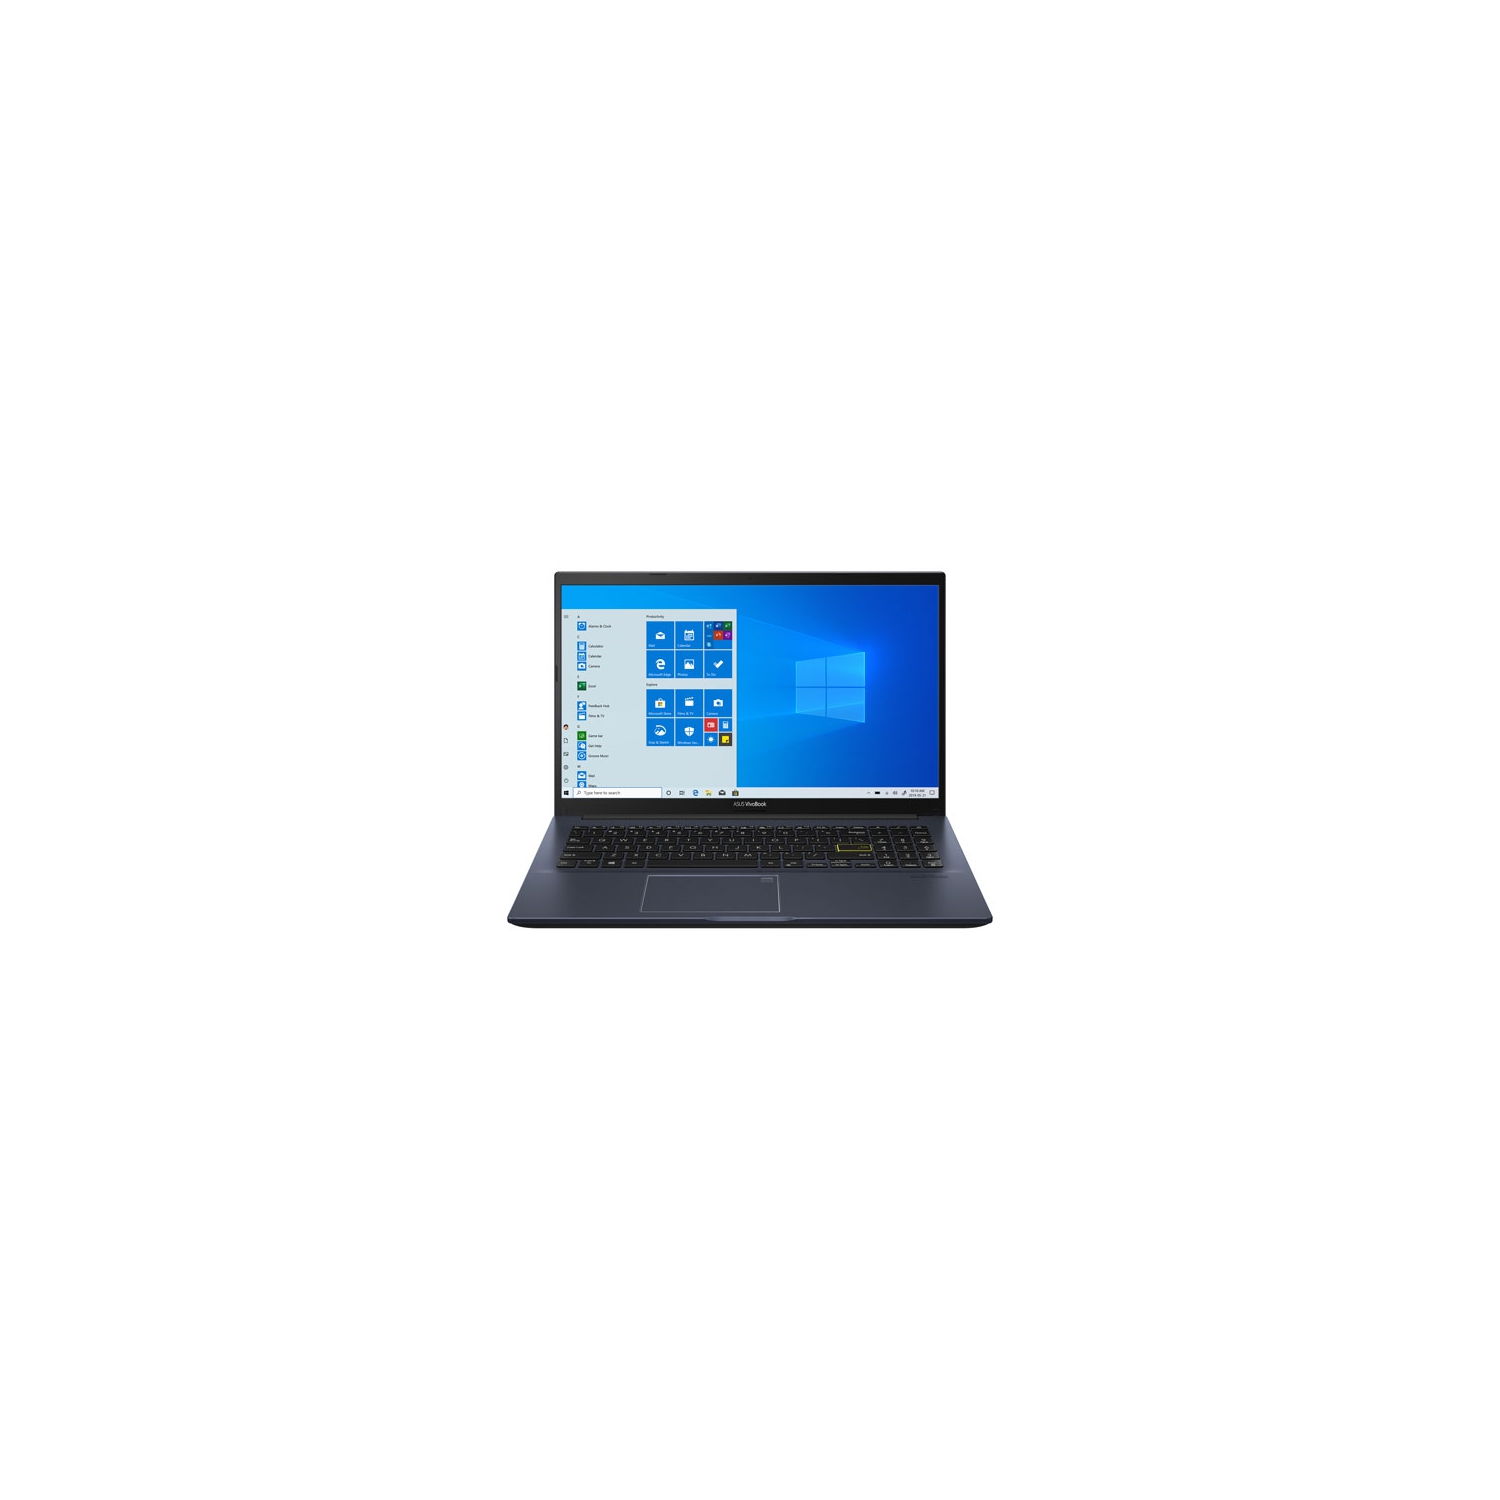 ASUS VivoBook 15.6" Laptop (AMD Ryzen 5 5500U/512GB SSD/12GB RAM/Windows 10) - Refurbished